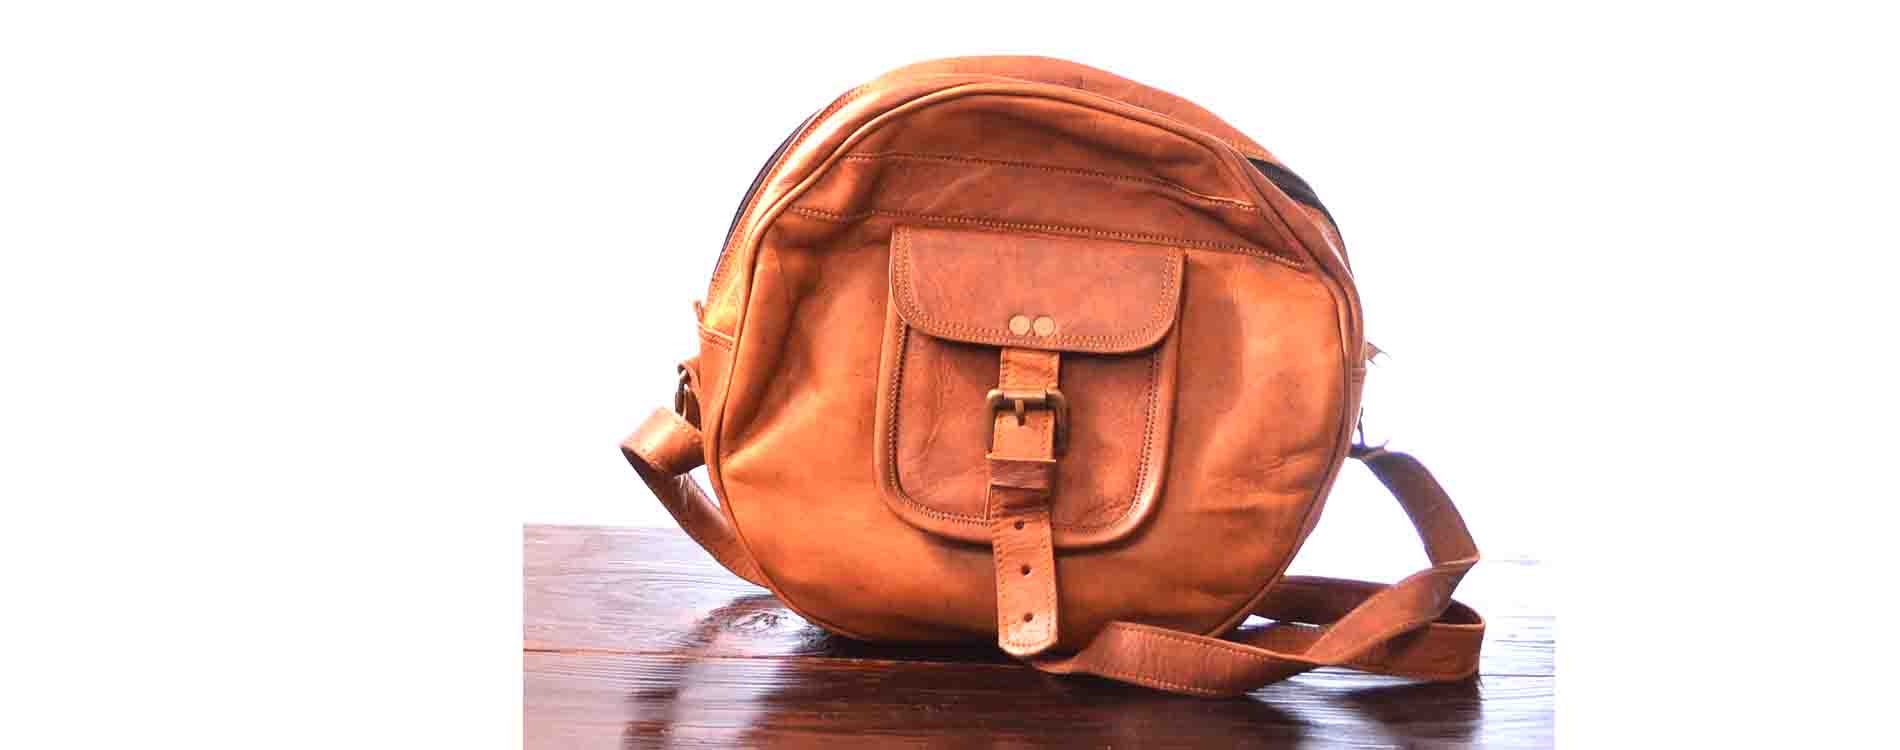 Rhinoland Unisex Vintage Syle Genuine Brown Leather Cross Body Shoulder Bag Handmade Purse by Rhinoland